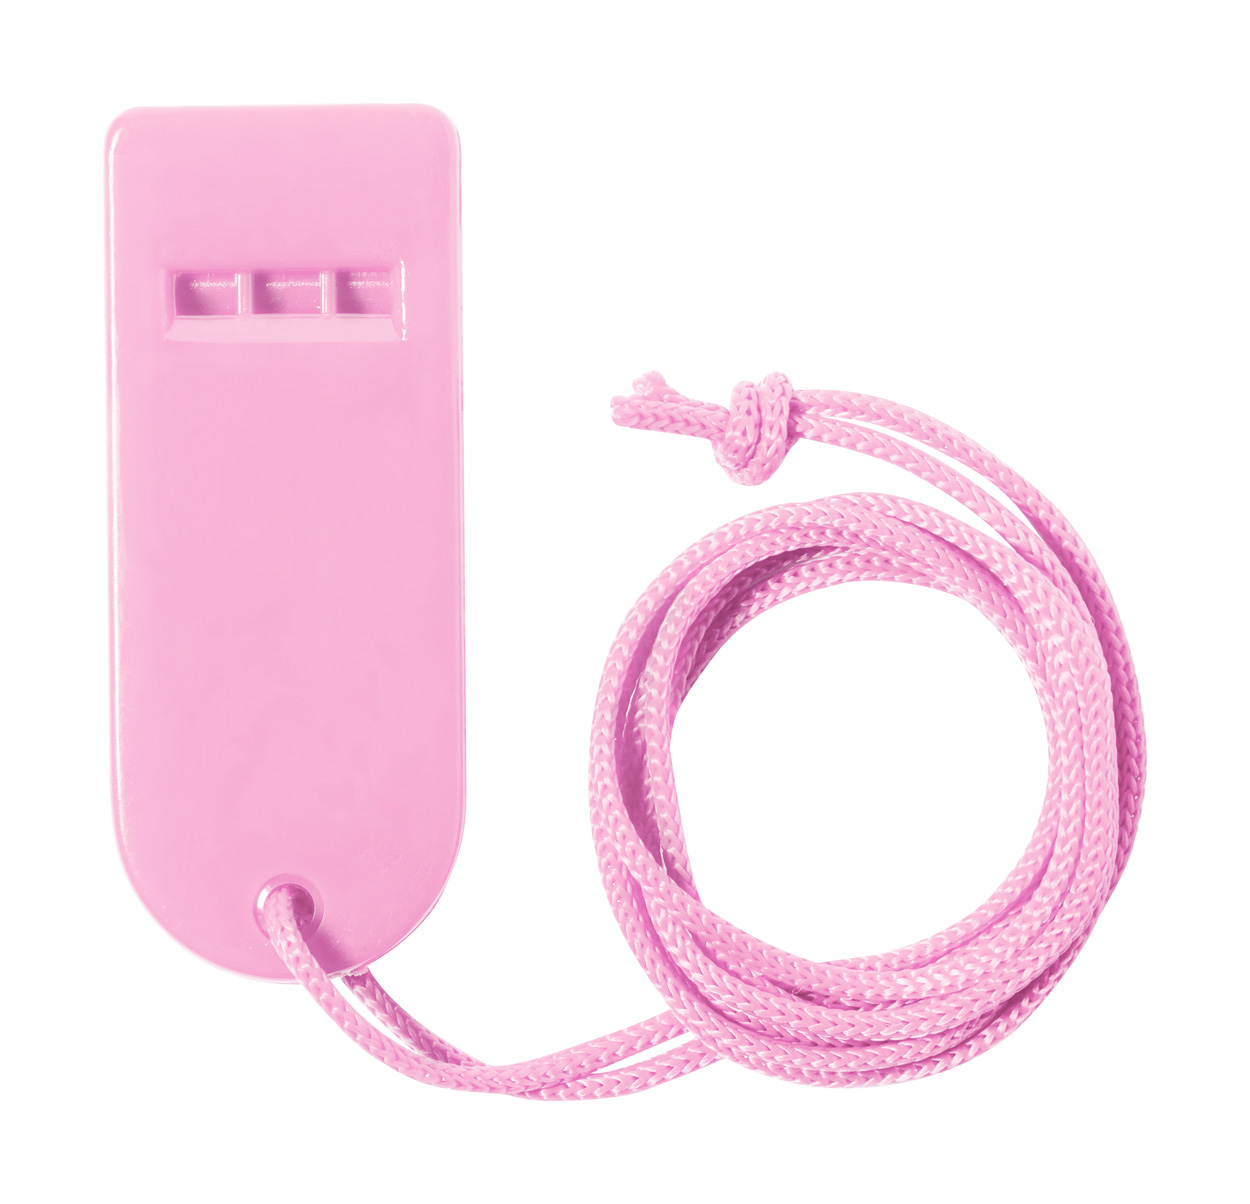 Forlong whistle - pink